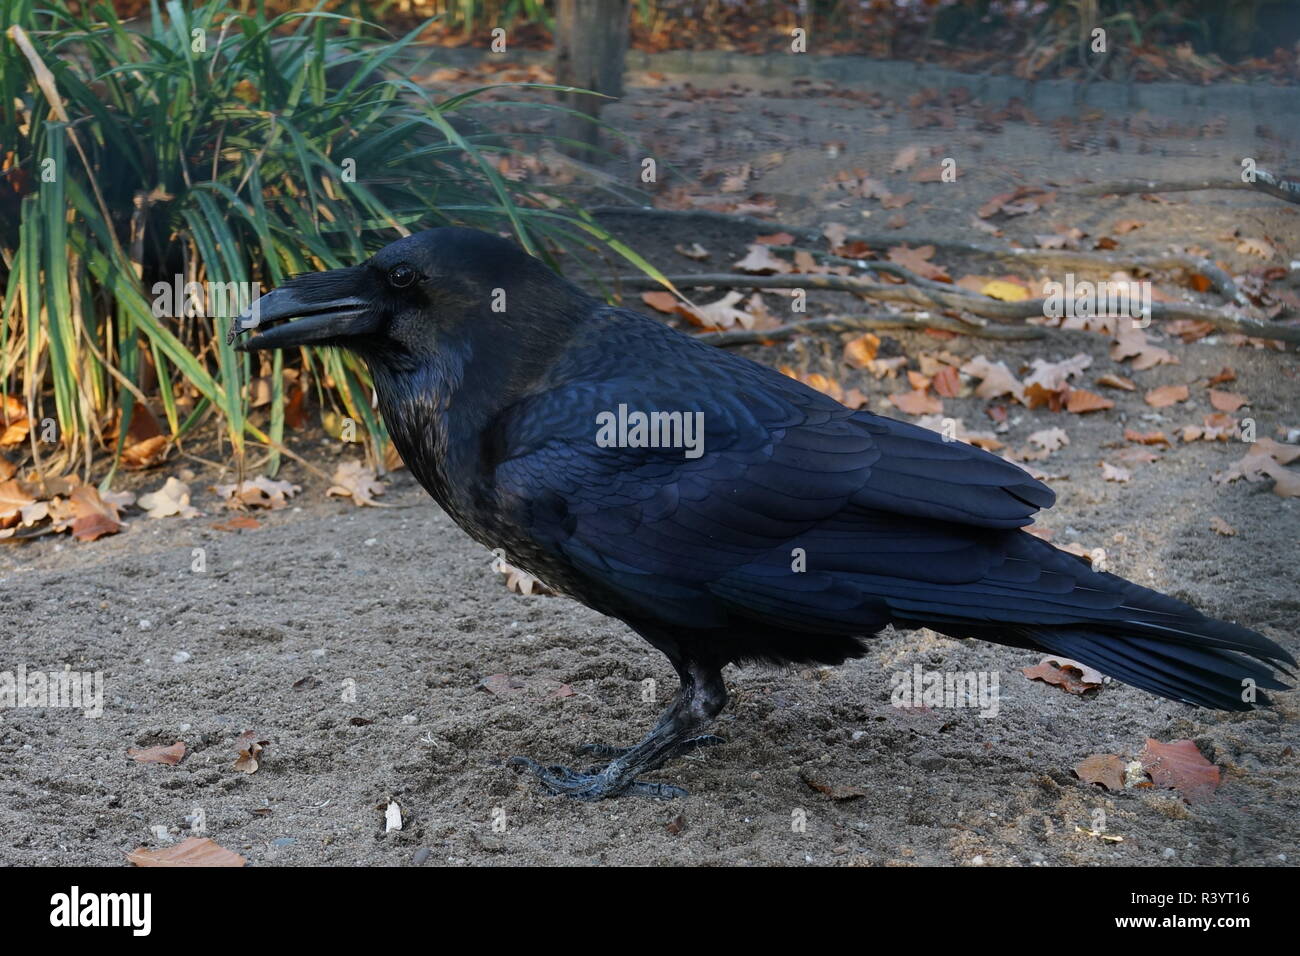 Raven sitting on sandy ground Stock Photo